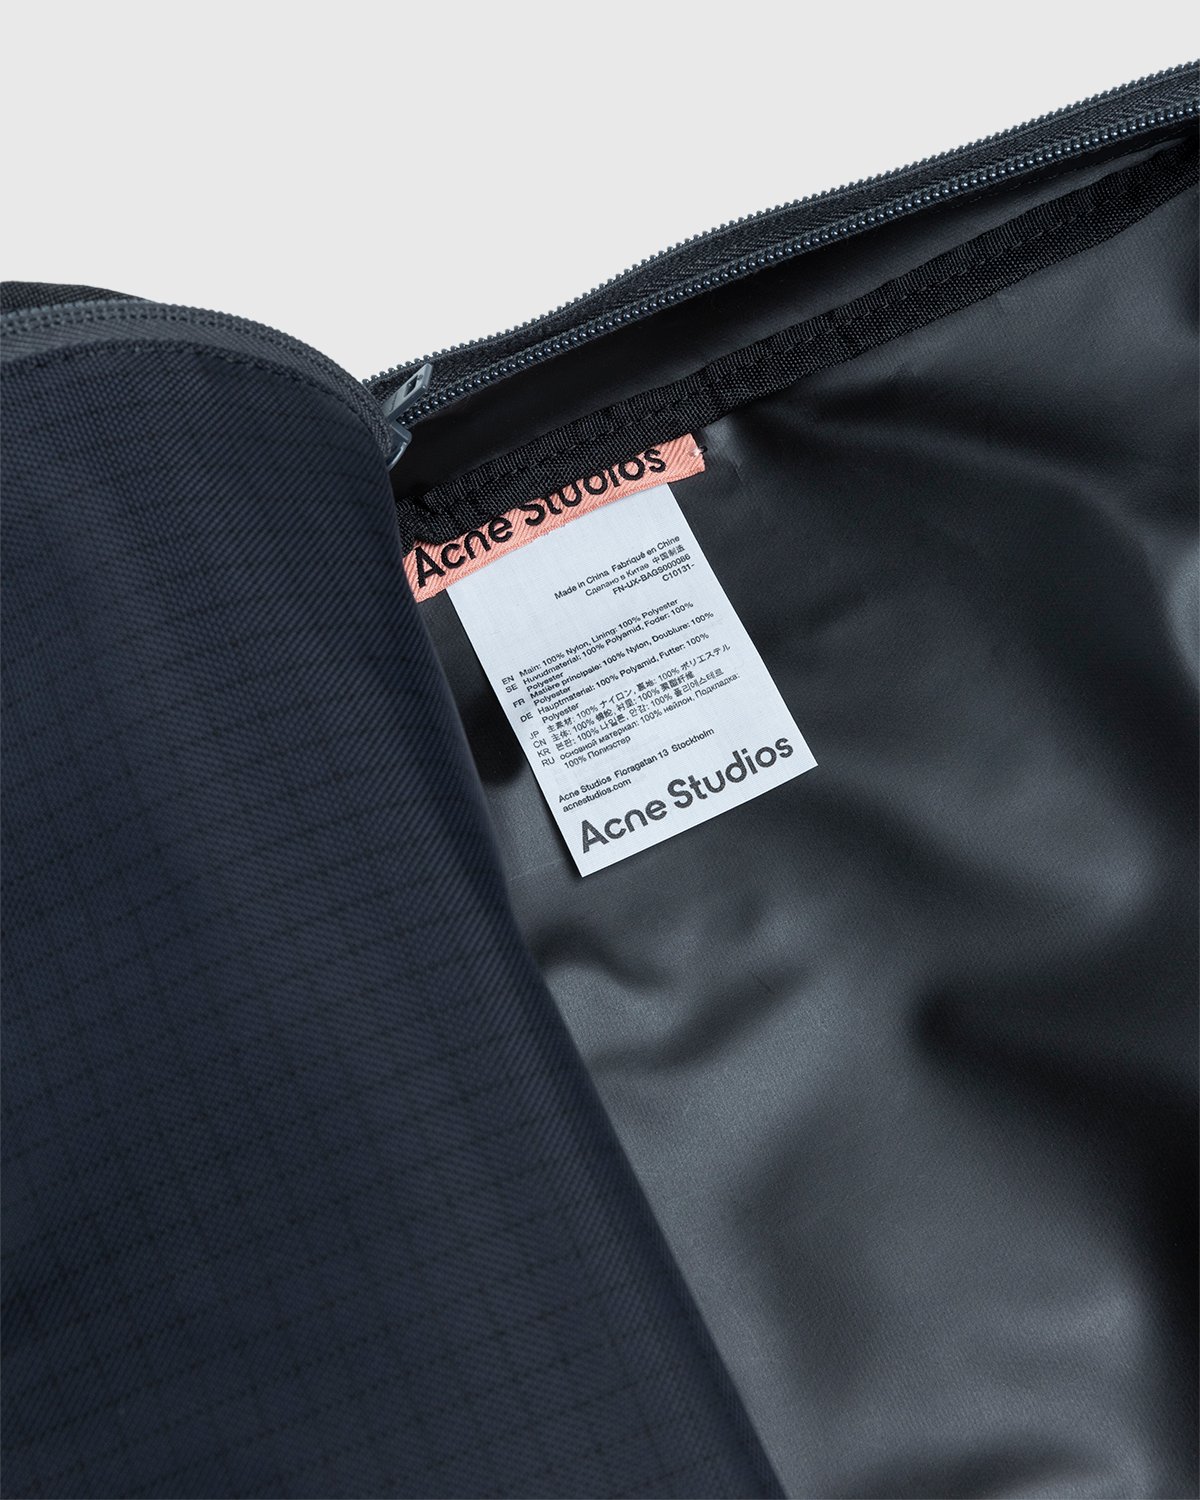 Acne Studios - Nylon Crossbody Laptop Bag Black/Khaki Green - Accessories - Black - Image 6